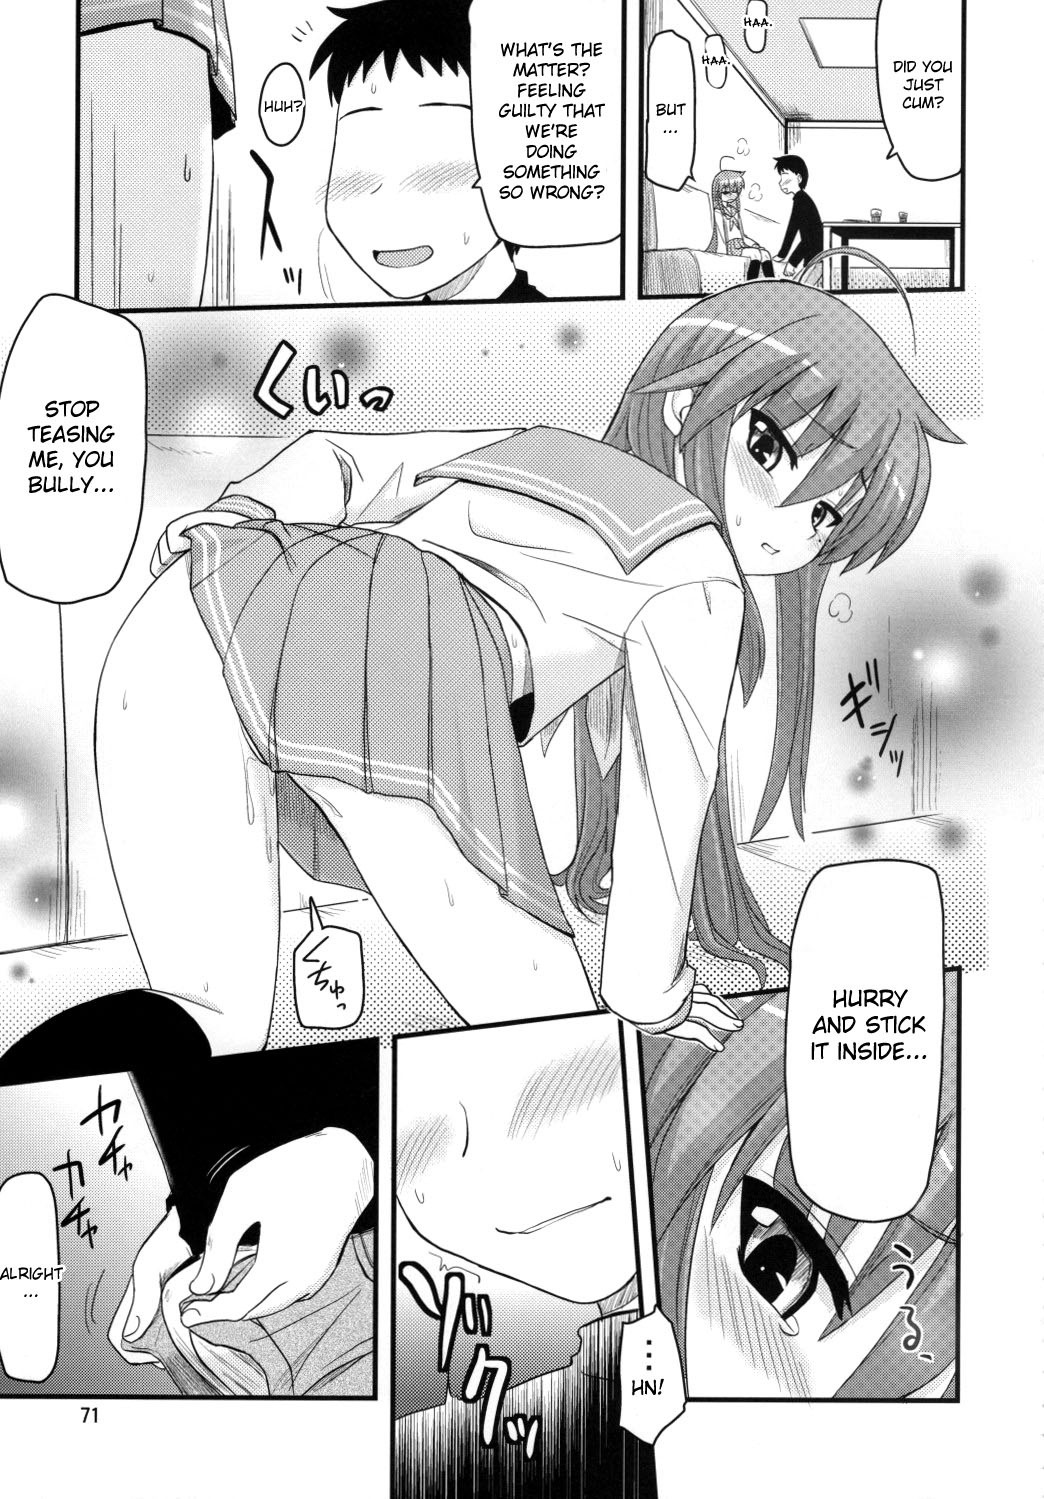 Konata and Oh-zu 4 people each and every one + 1 hentai manga picture 67